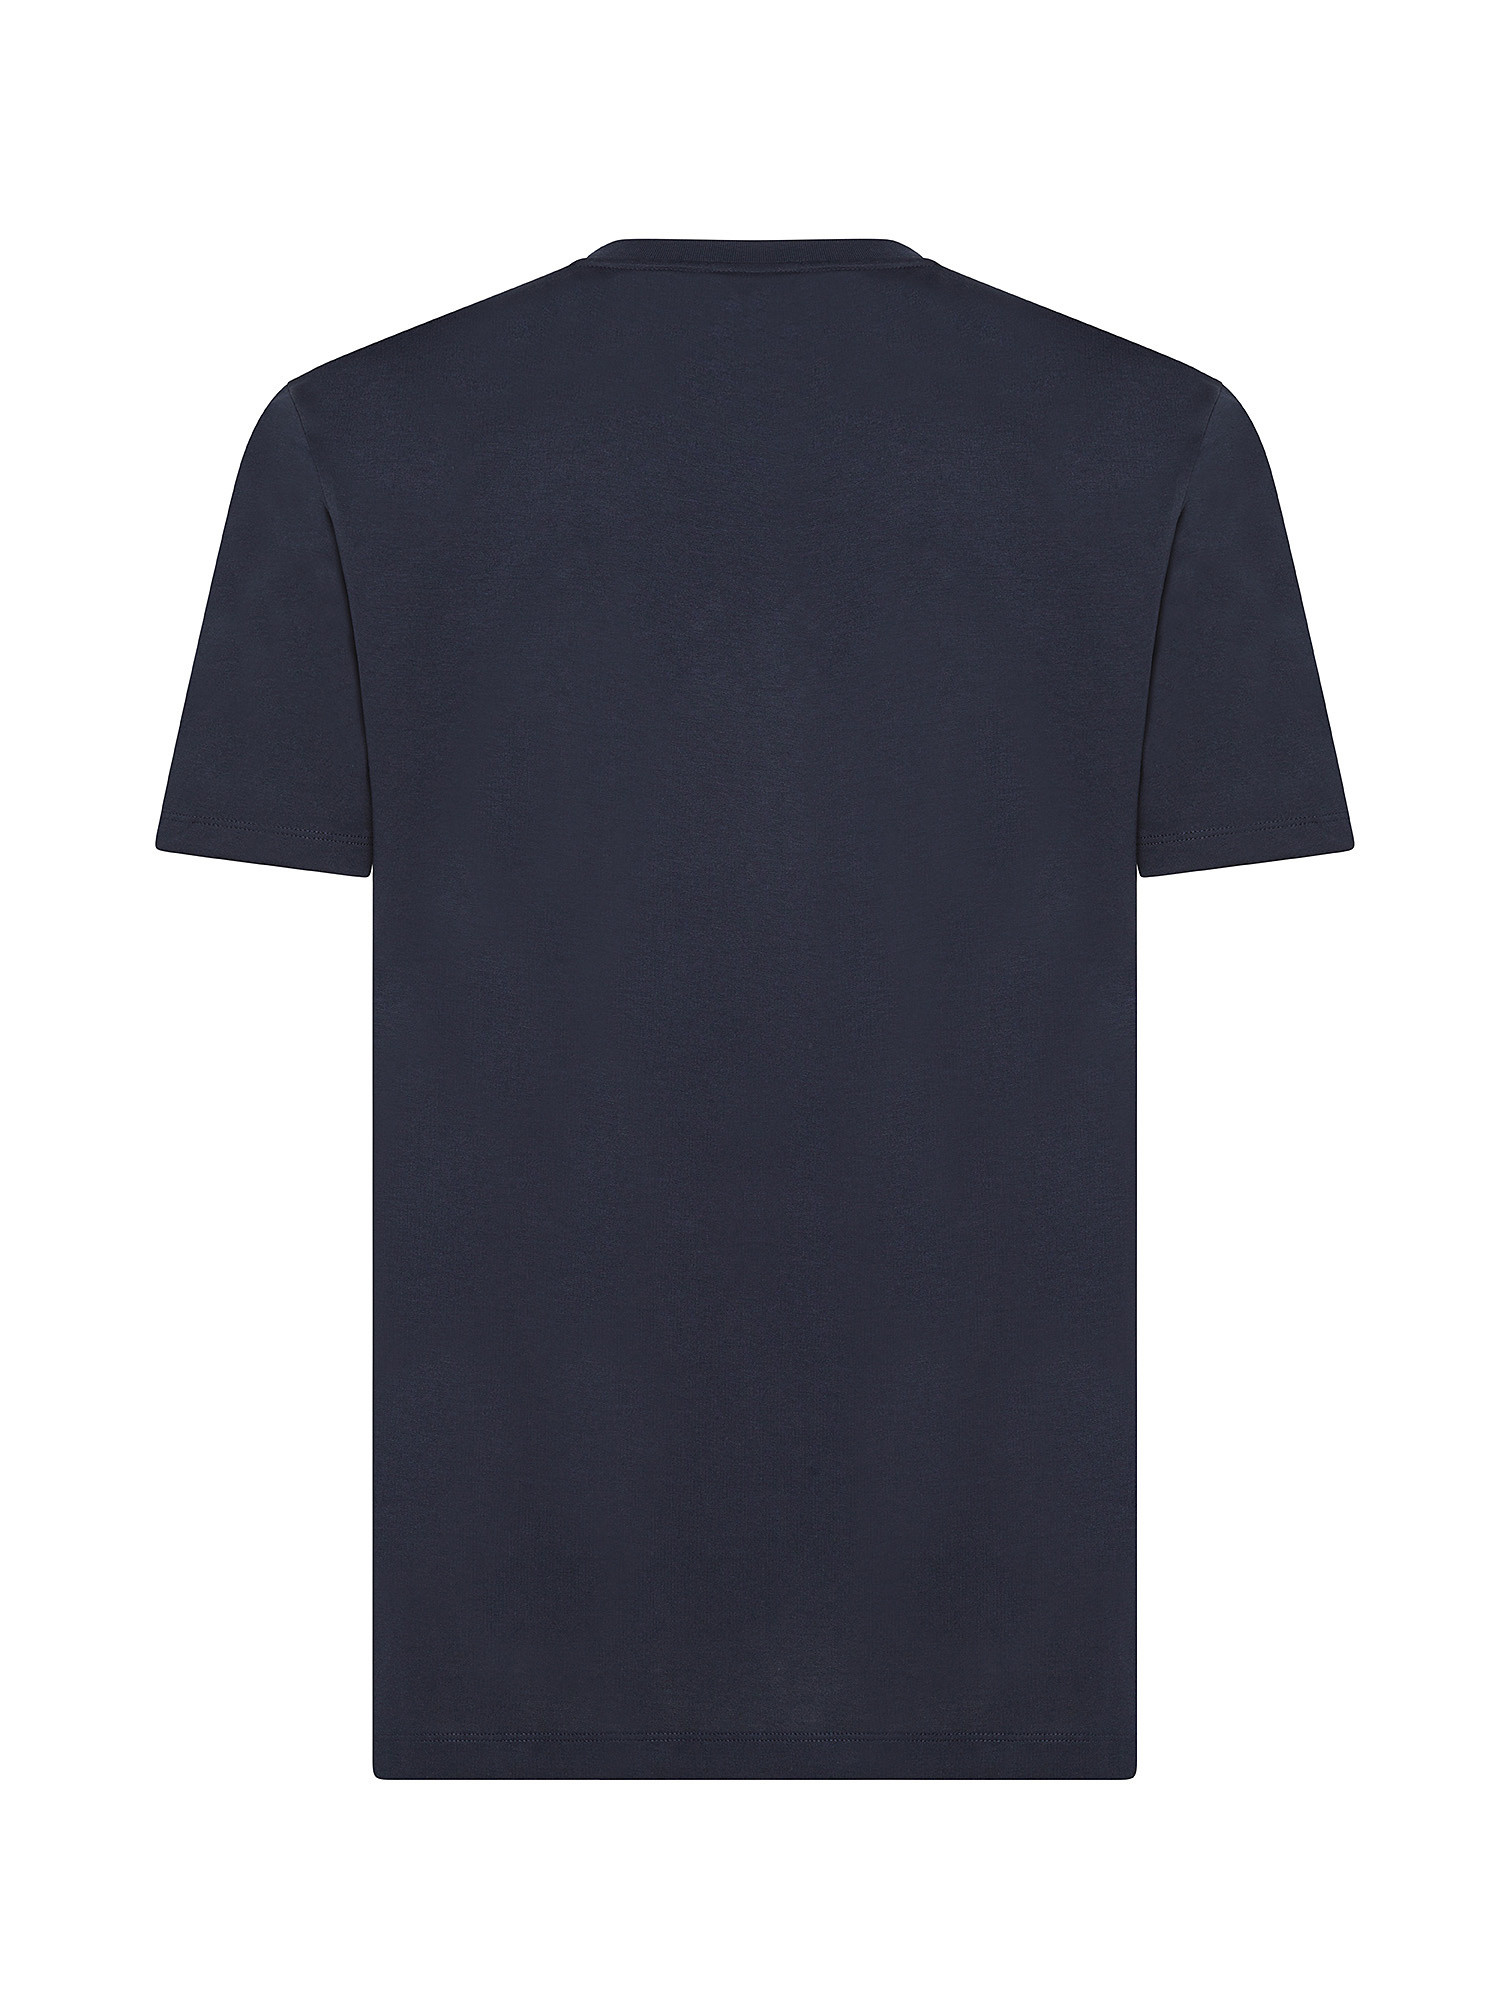 Hugo - Organic cotton T-shirt with printed logo, Dark Blue, large image number 1